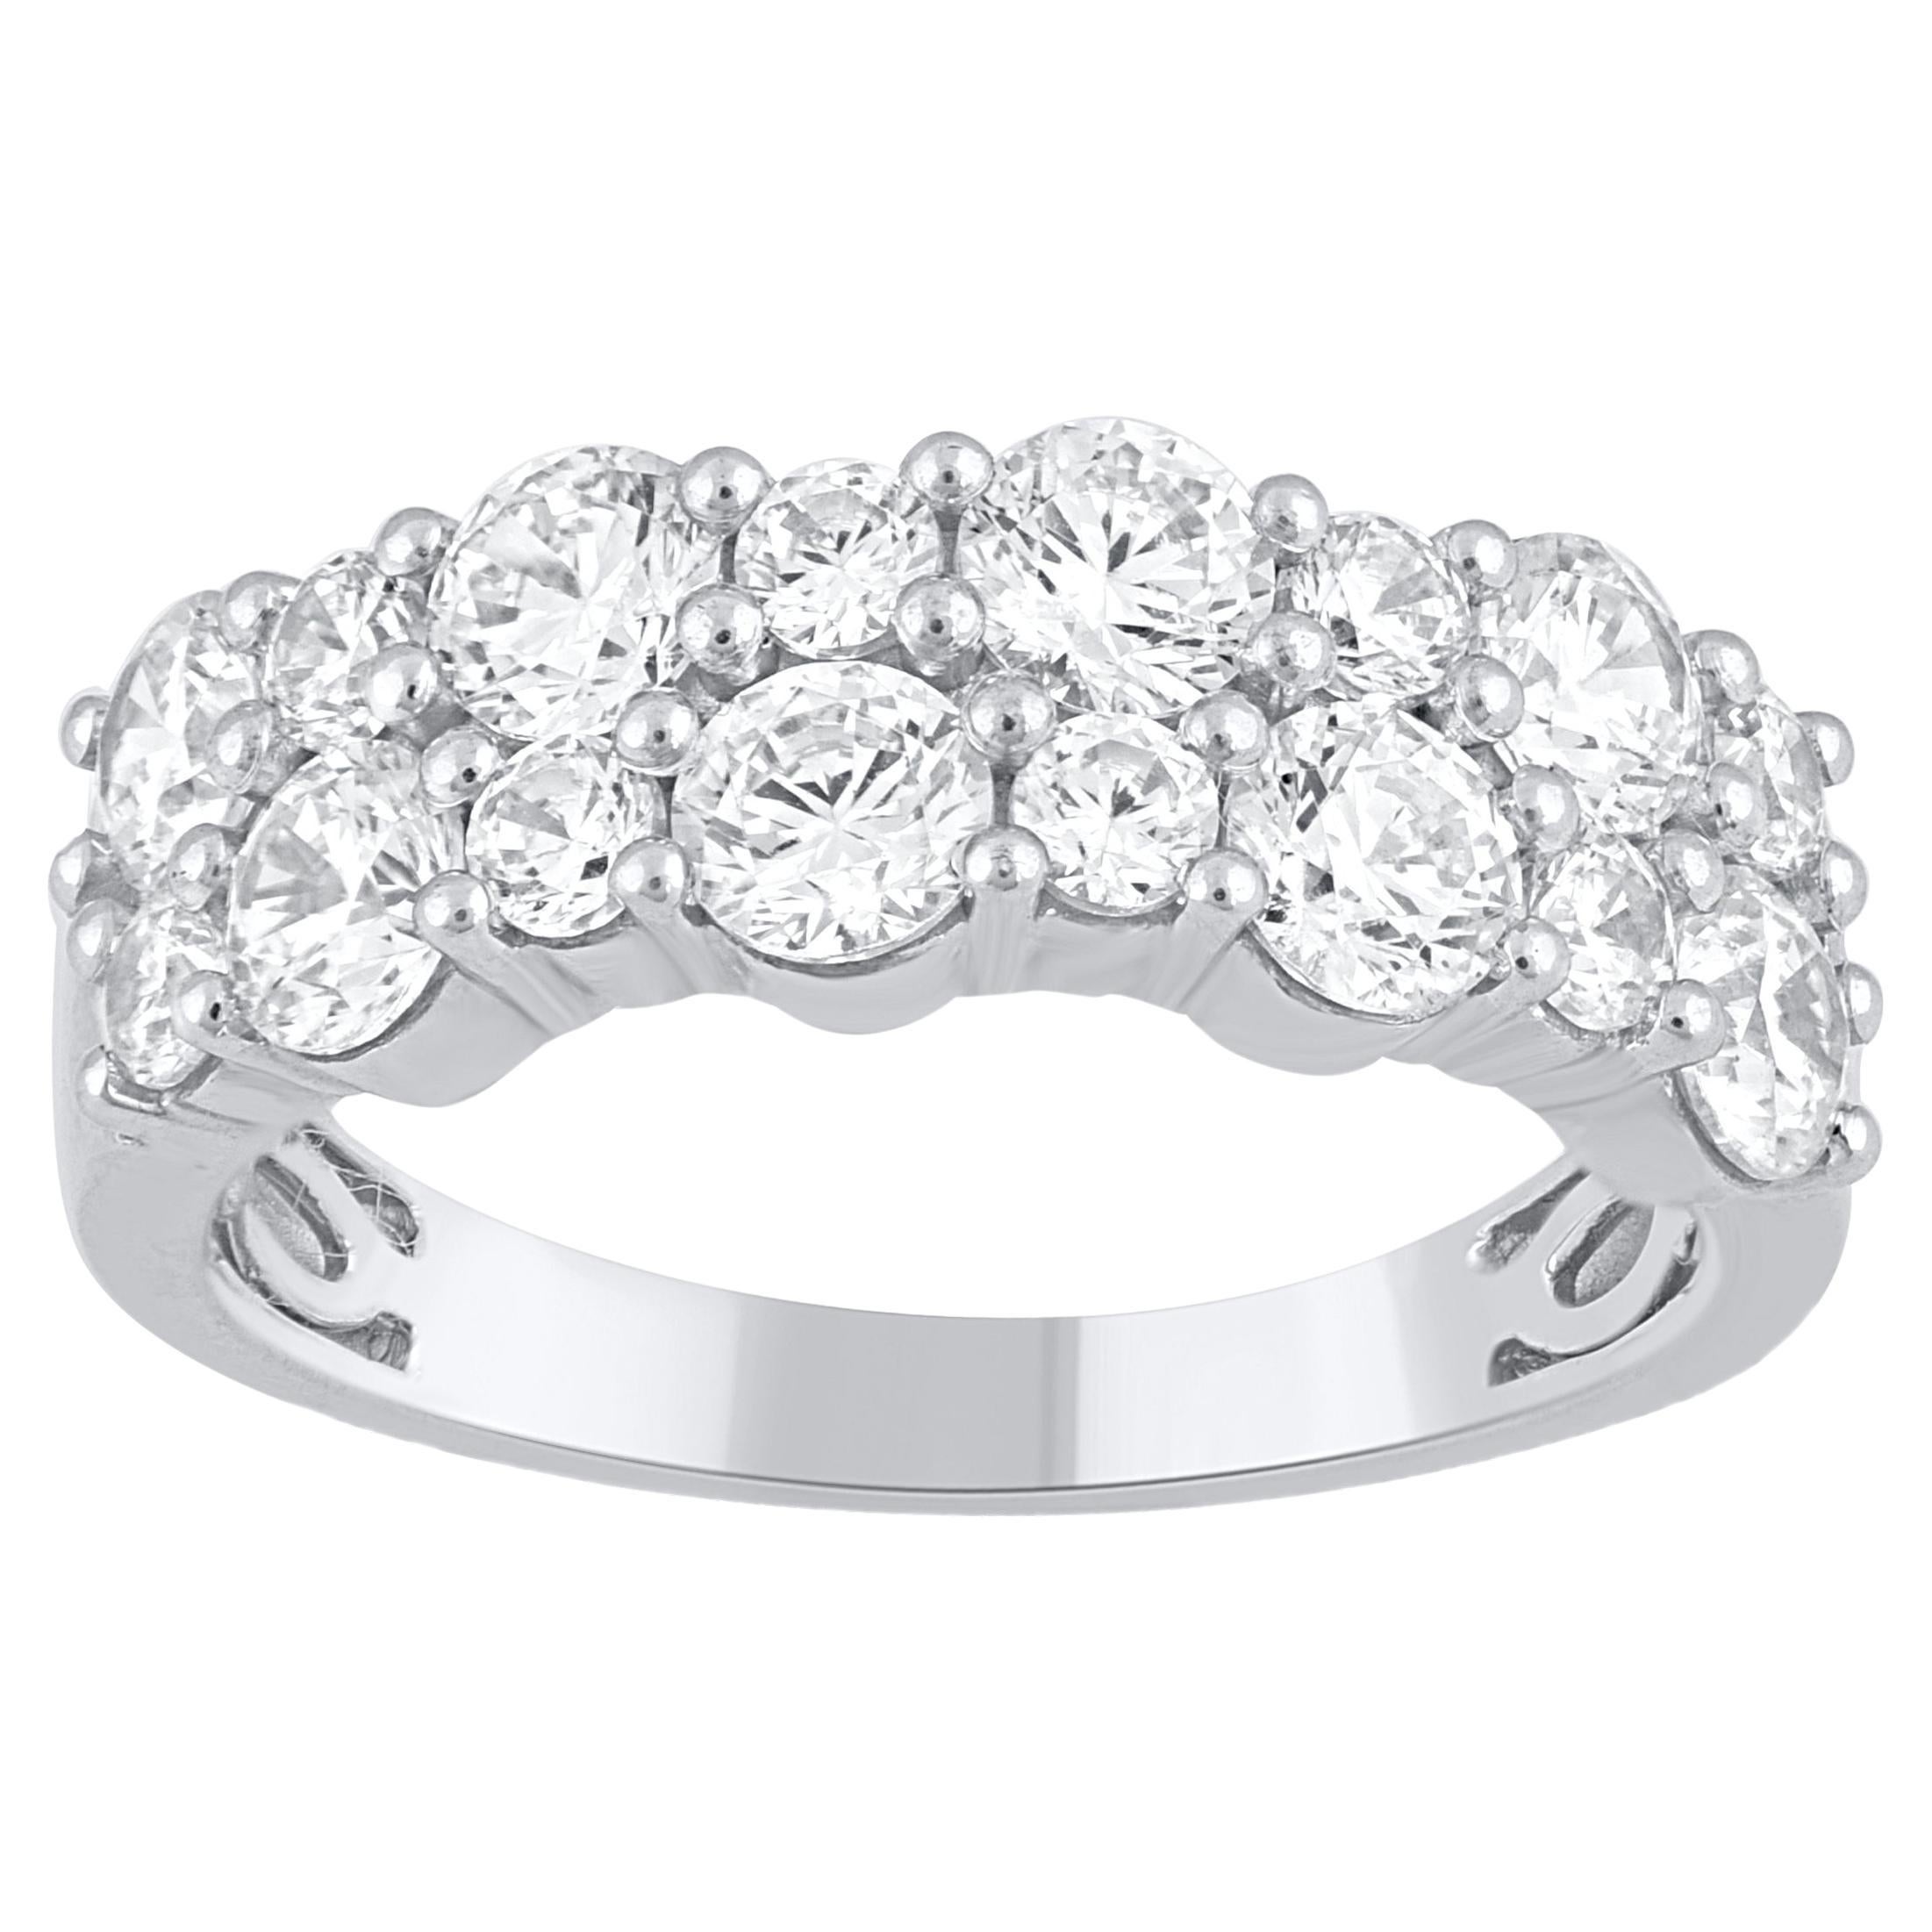 TJD 2.0 Carat Brilliant Cut Diamond 14Karat White Gold Two Row Wedding Band Ring (anneau de mariage à deux rangs en or blanc)